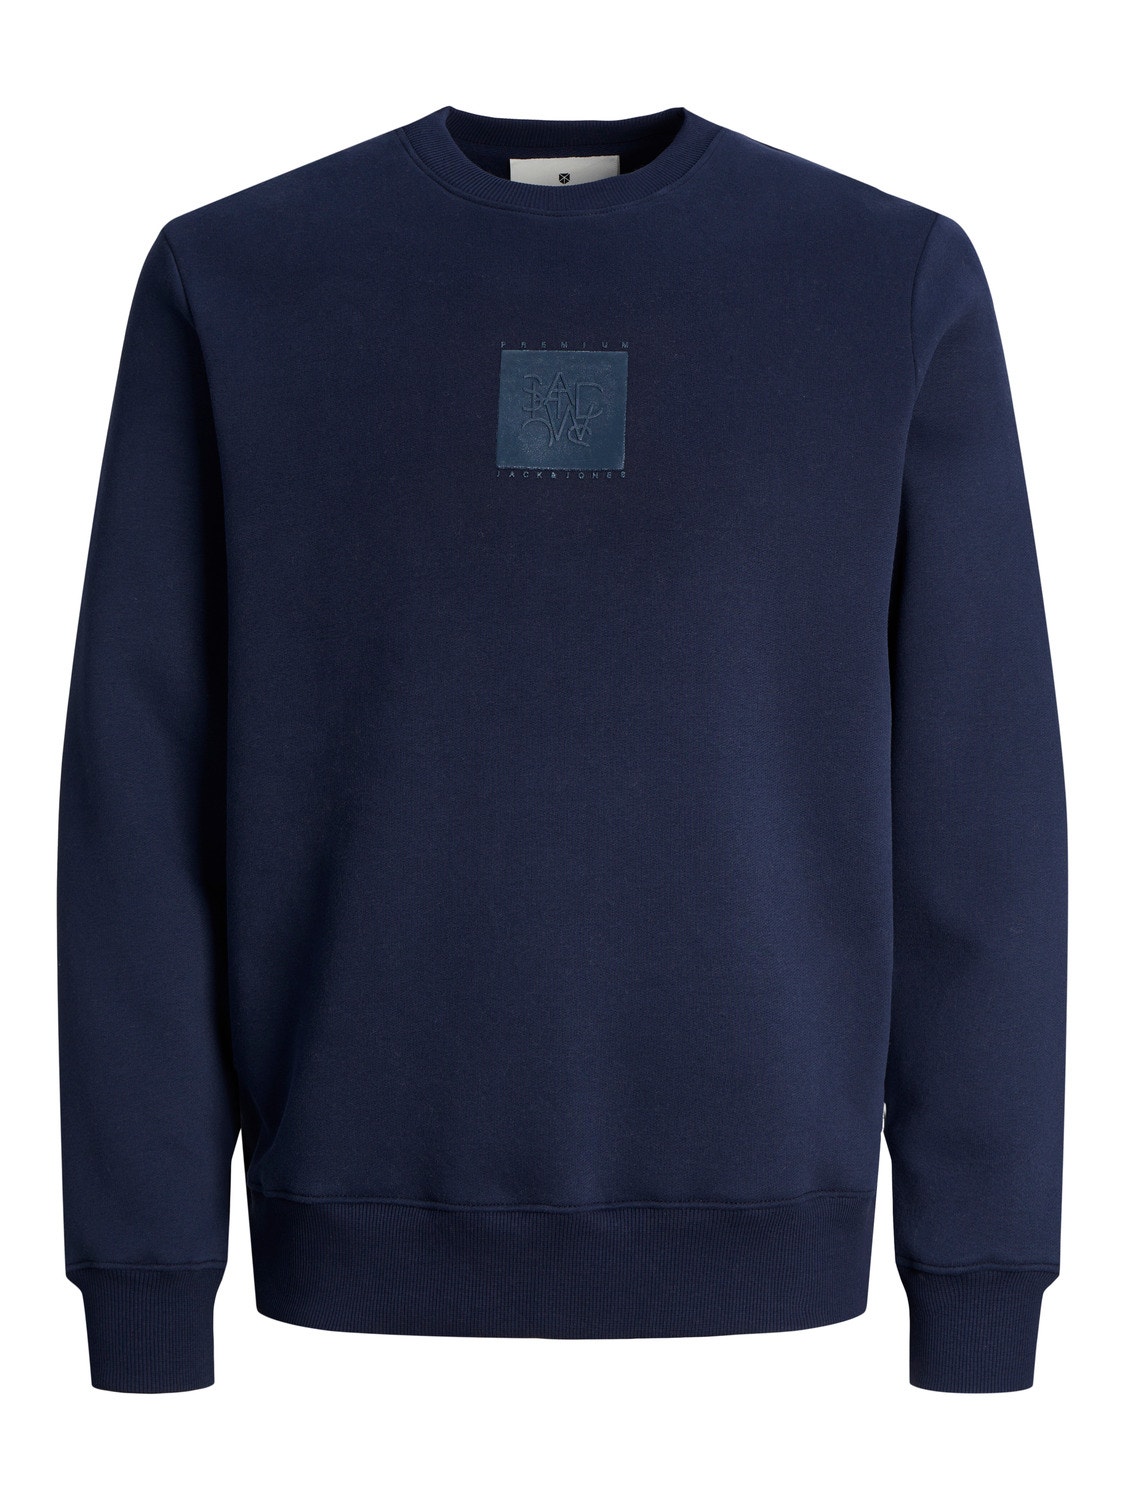 Jack & Jones Plain Crewn Neck Sweatshirt -Perfect Navy - 12250403